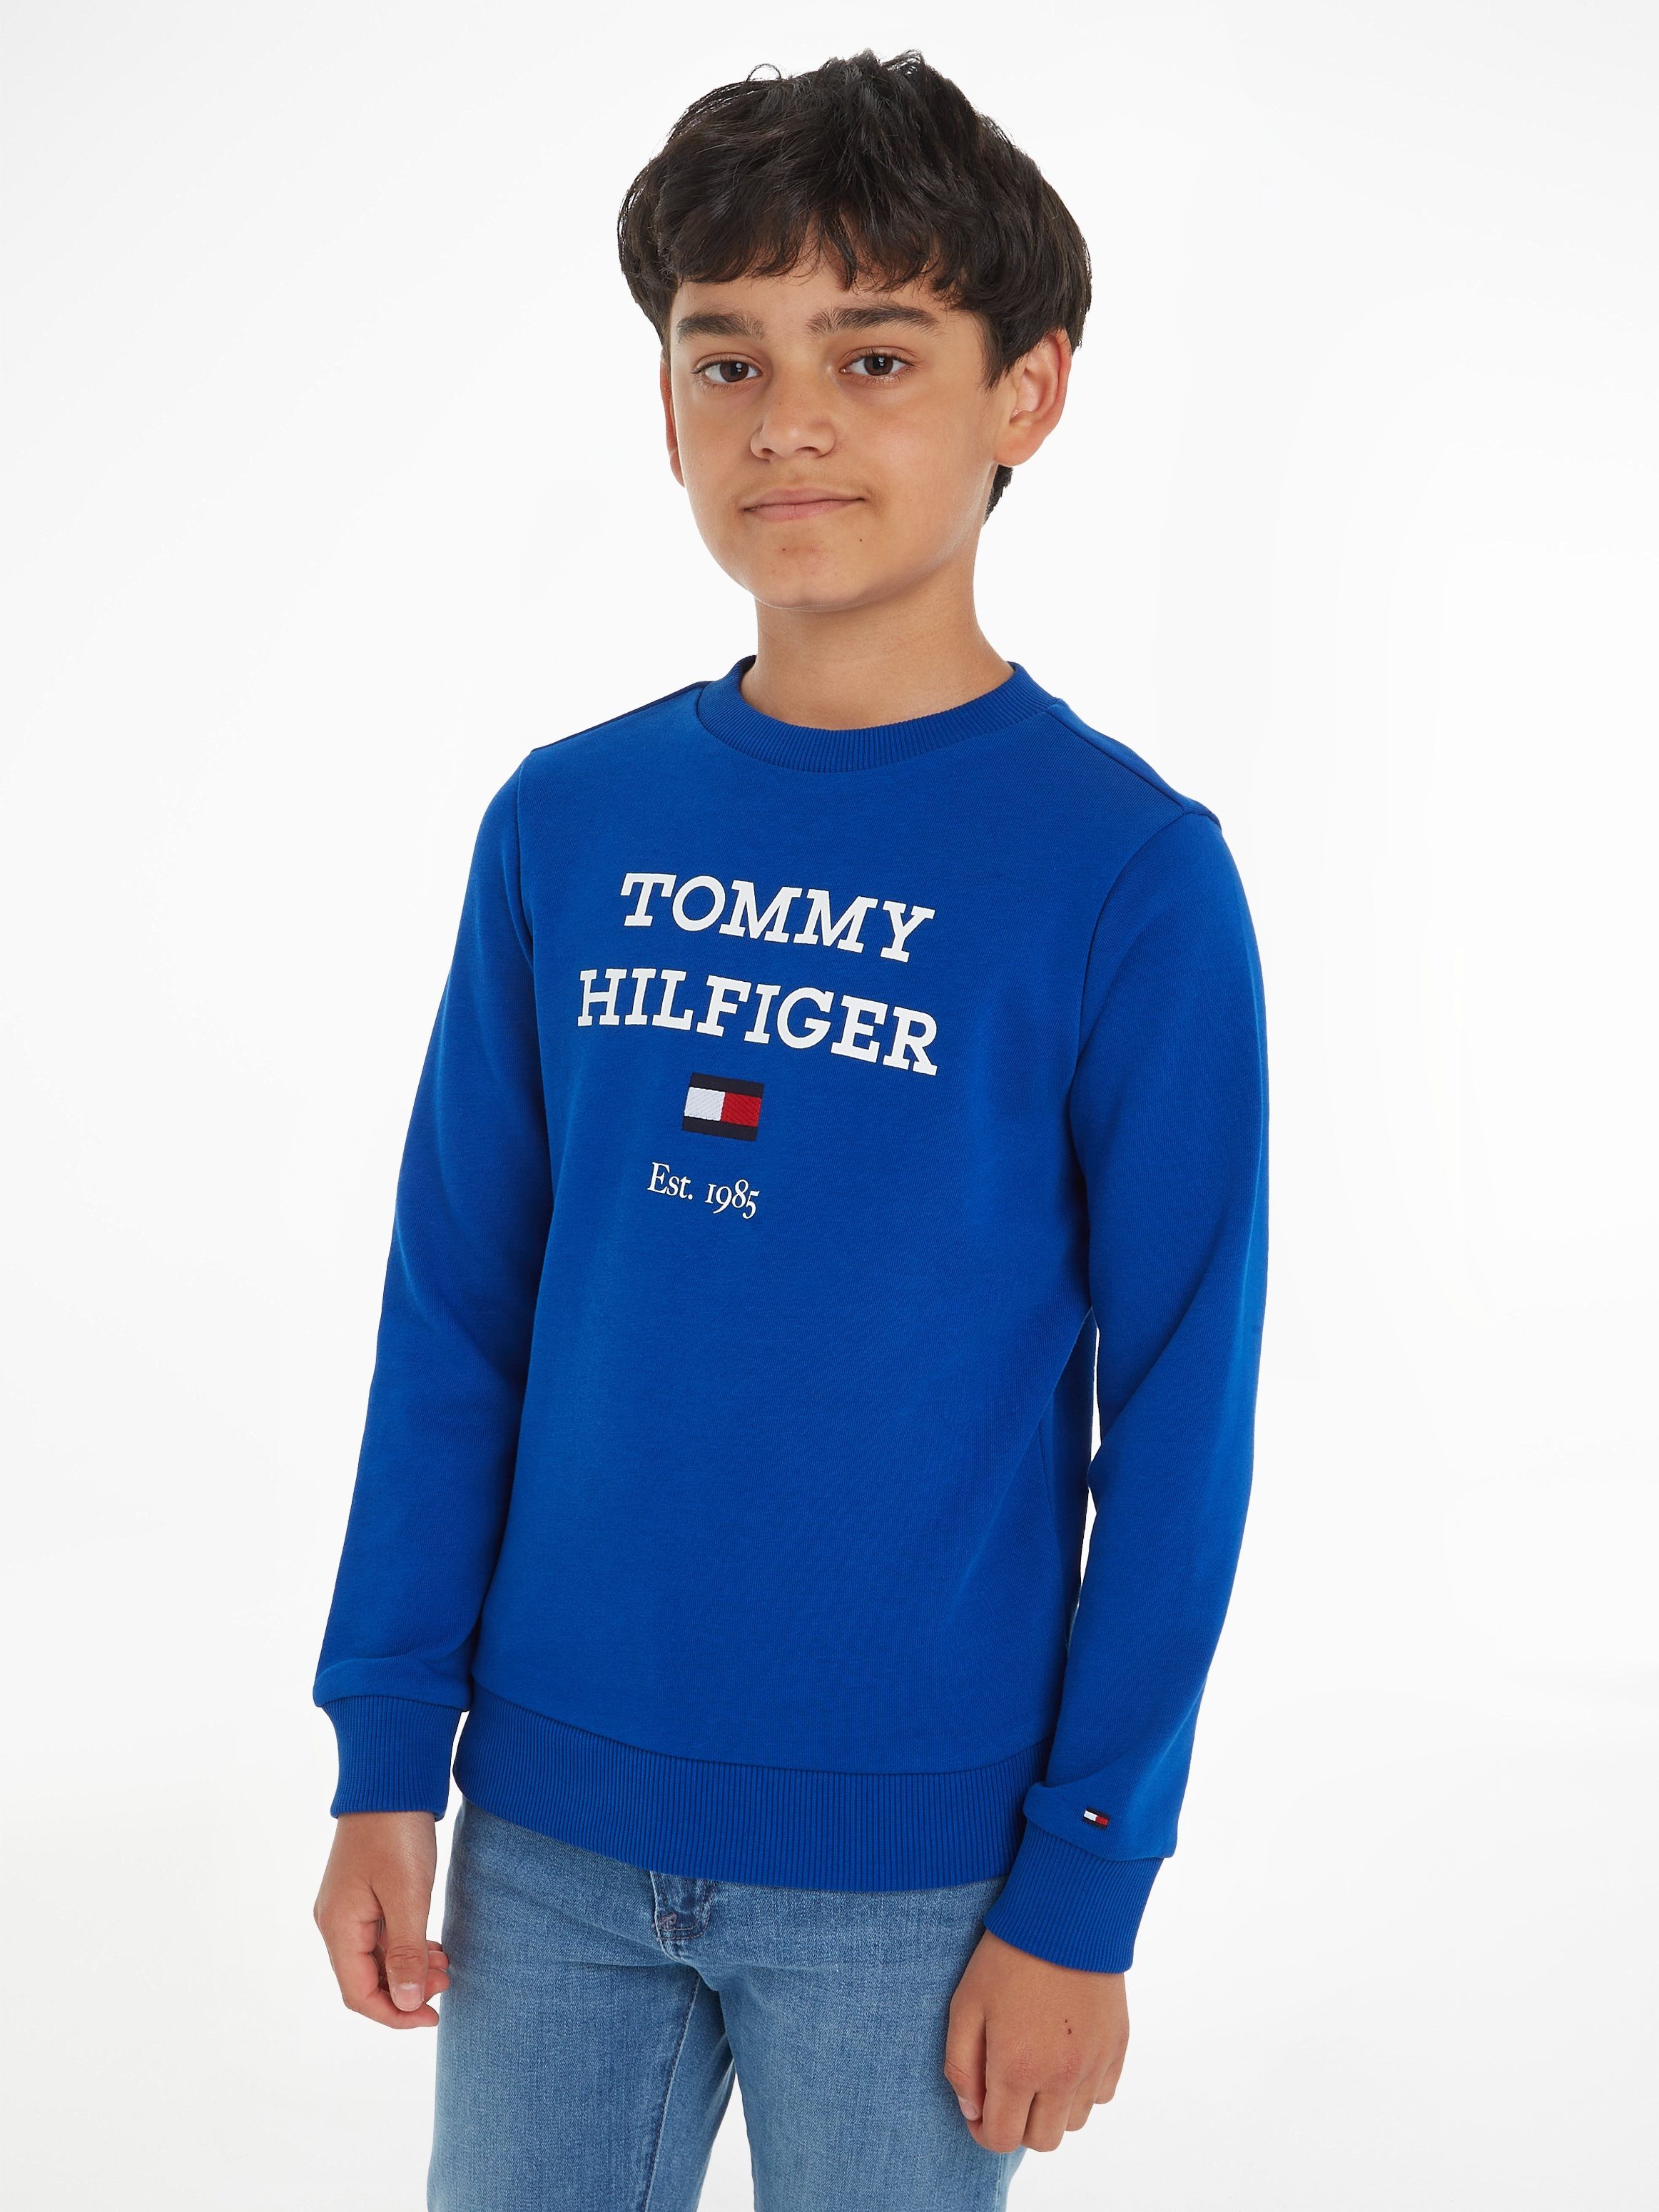 Tommy Hilfiger TH LOGO Logo großem Sweatshirt mit SWEATSHIRT ultra blue